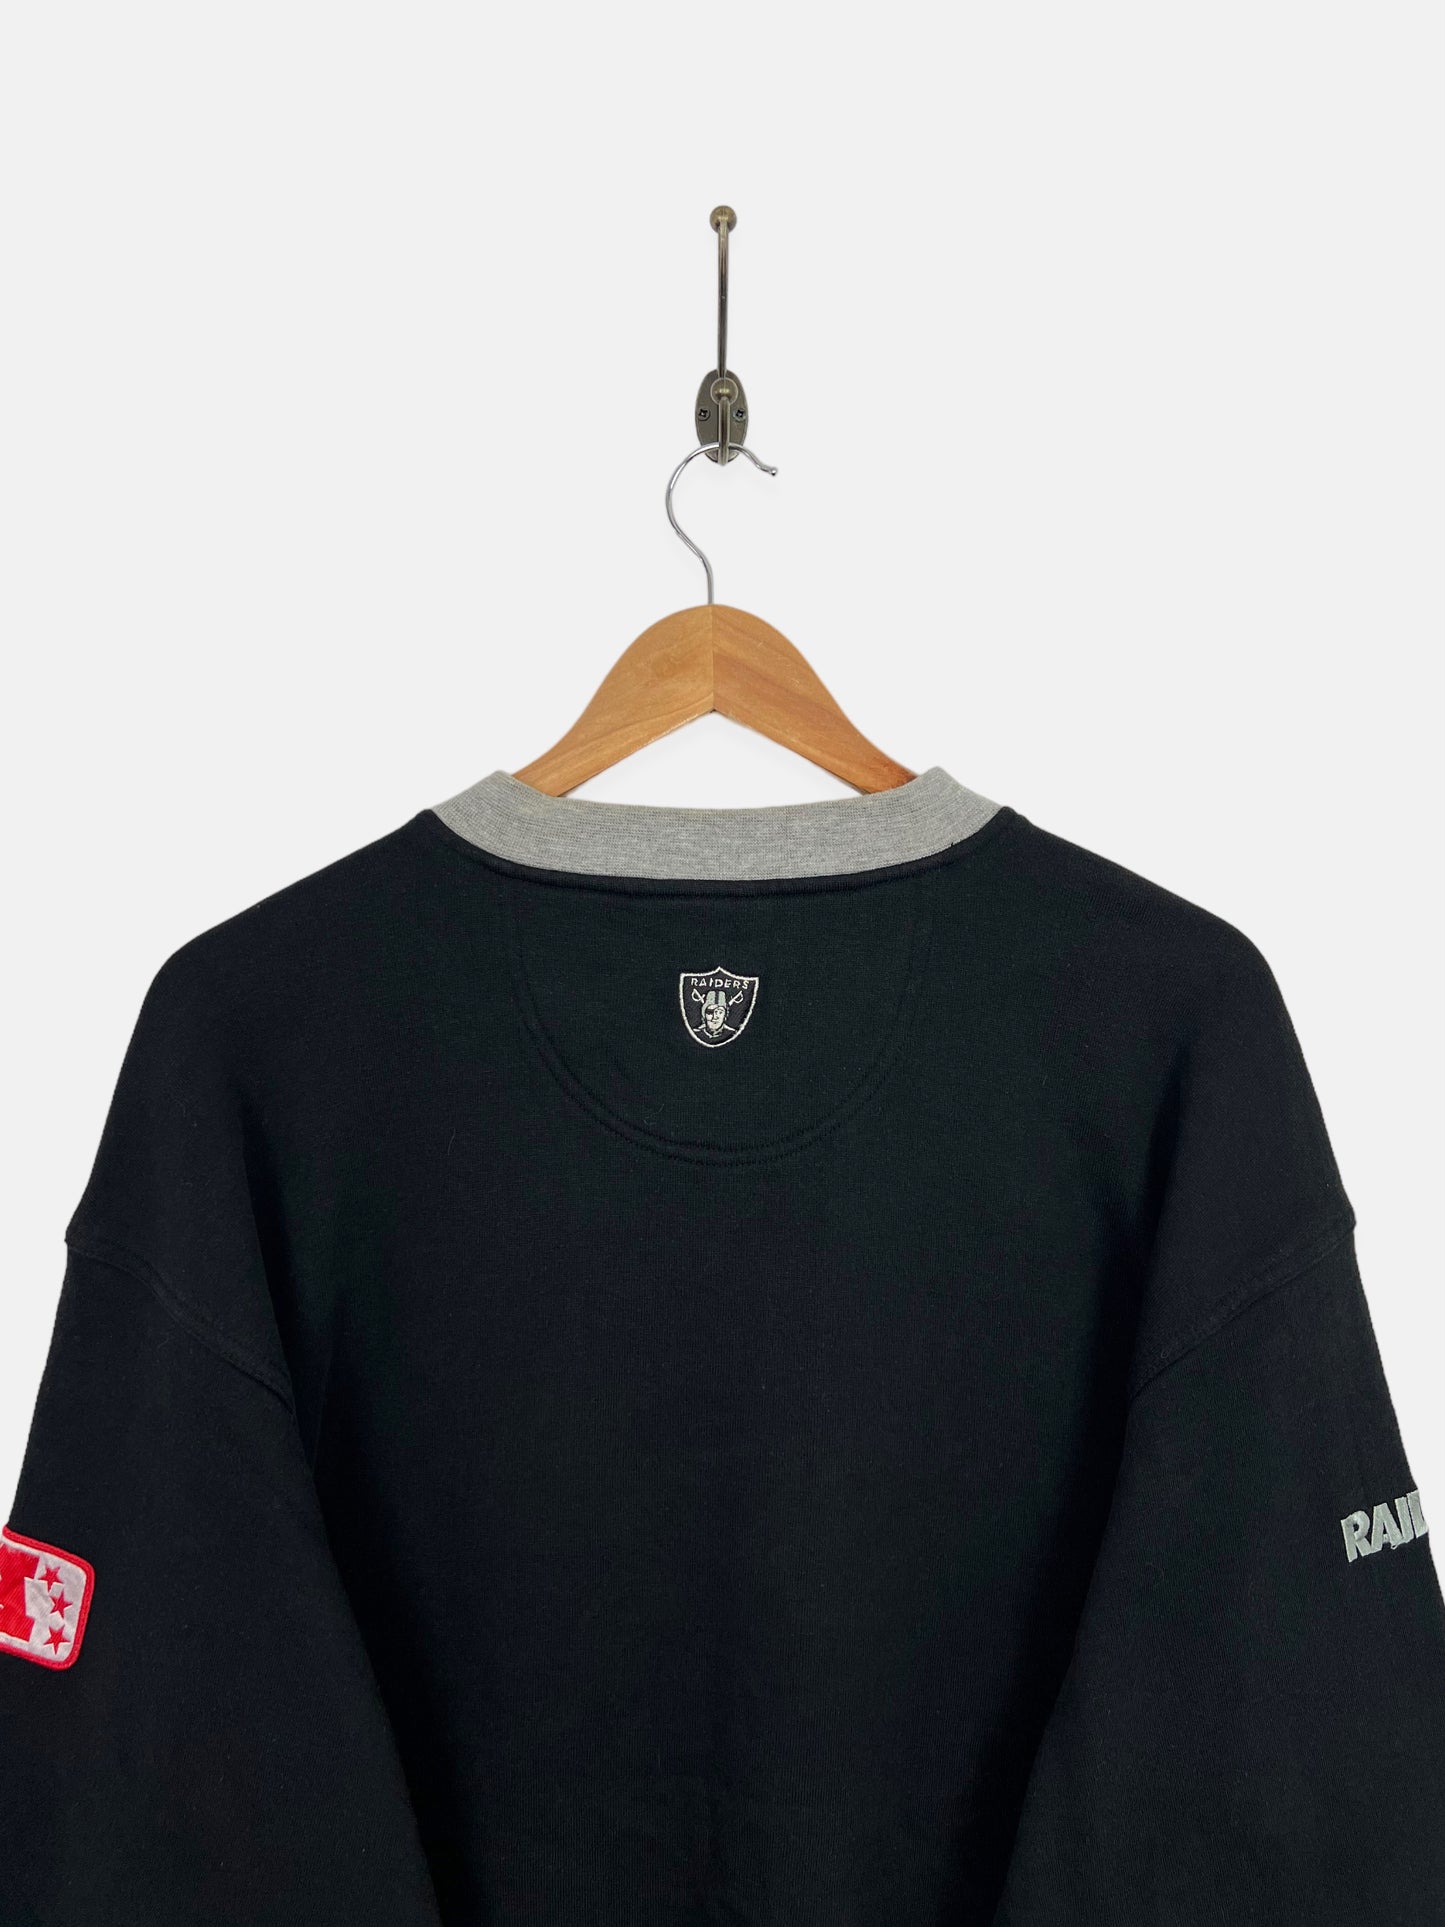 90's Oakland Raiders NFL Embroidered Vintage Sweatshirt Size L-XL